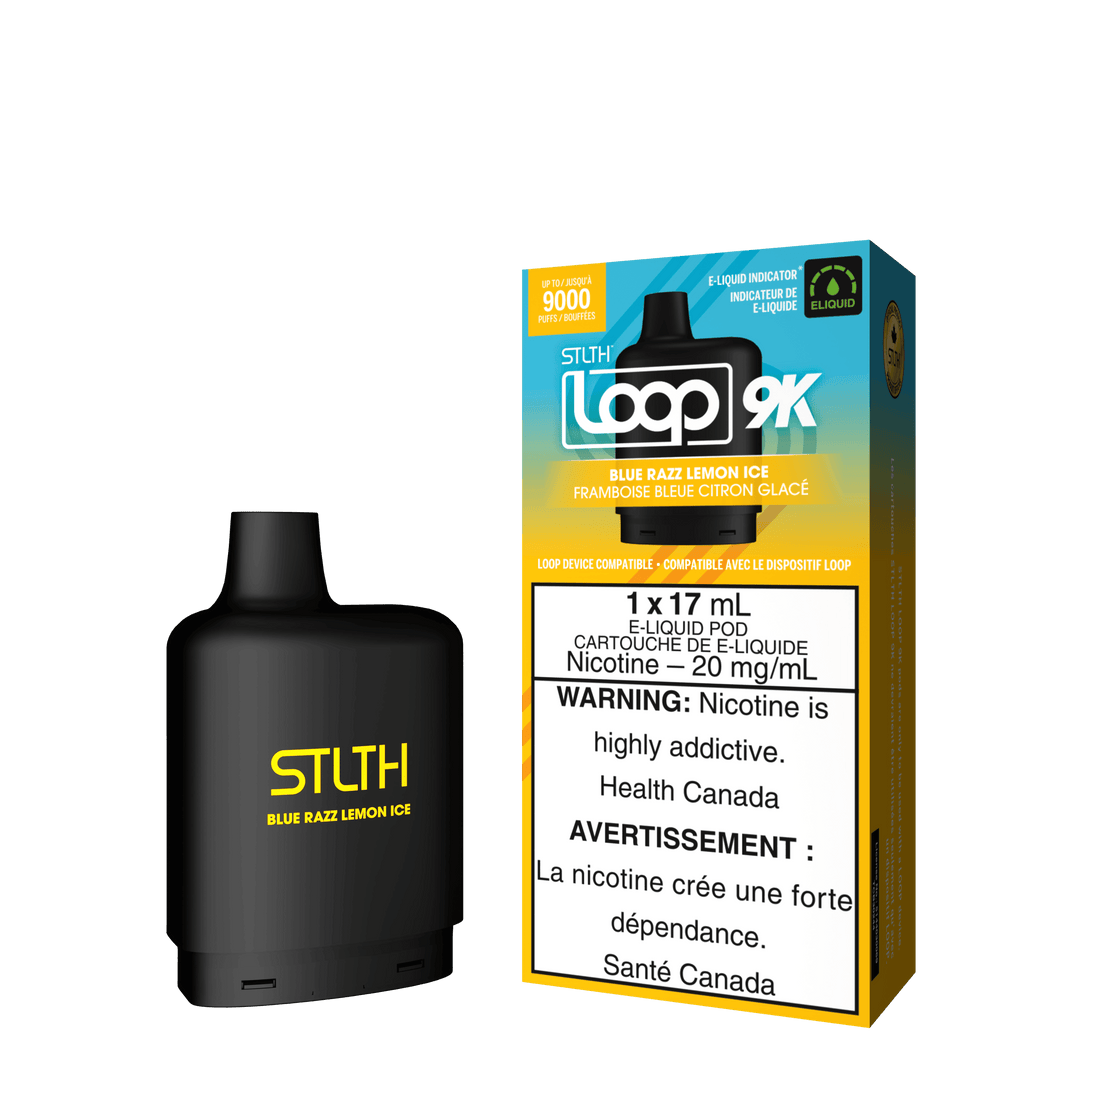 STLTH Loop 9K - Blue Razz Lemon Ice - Vapor Shoppe